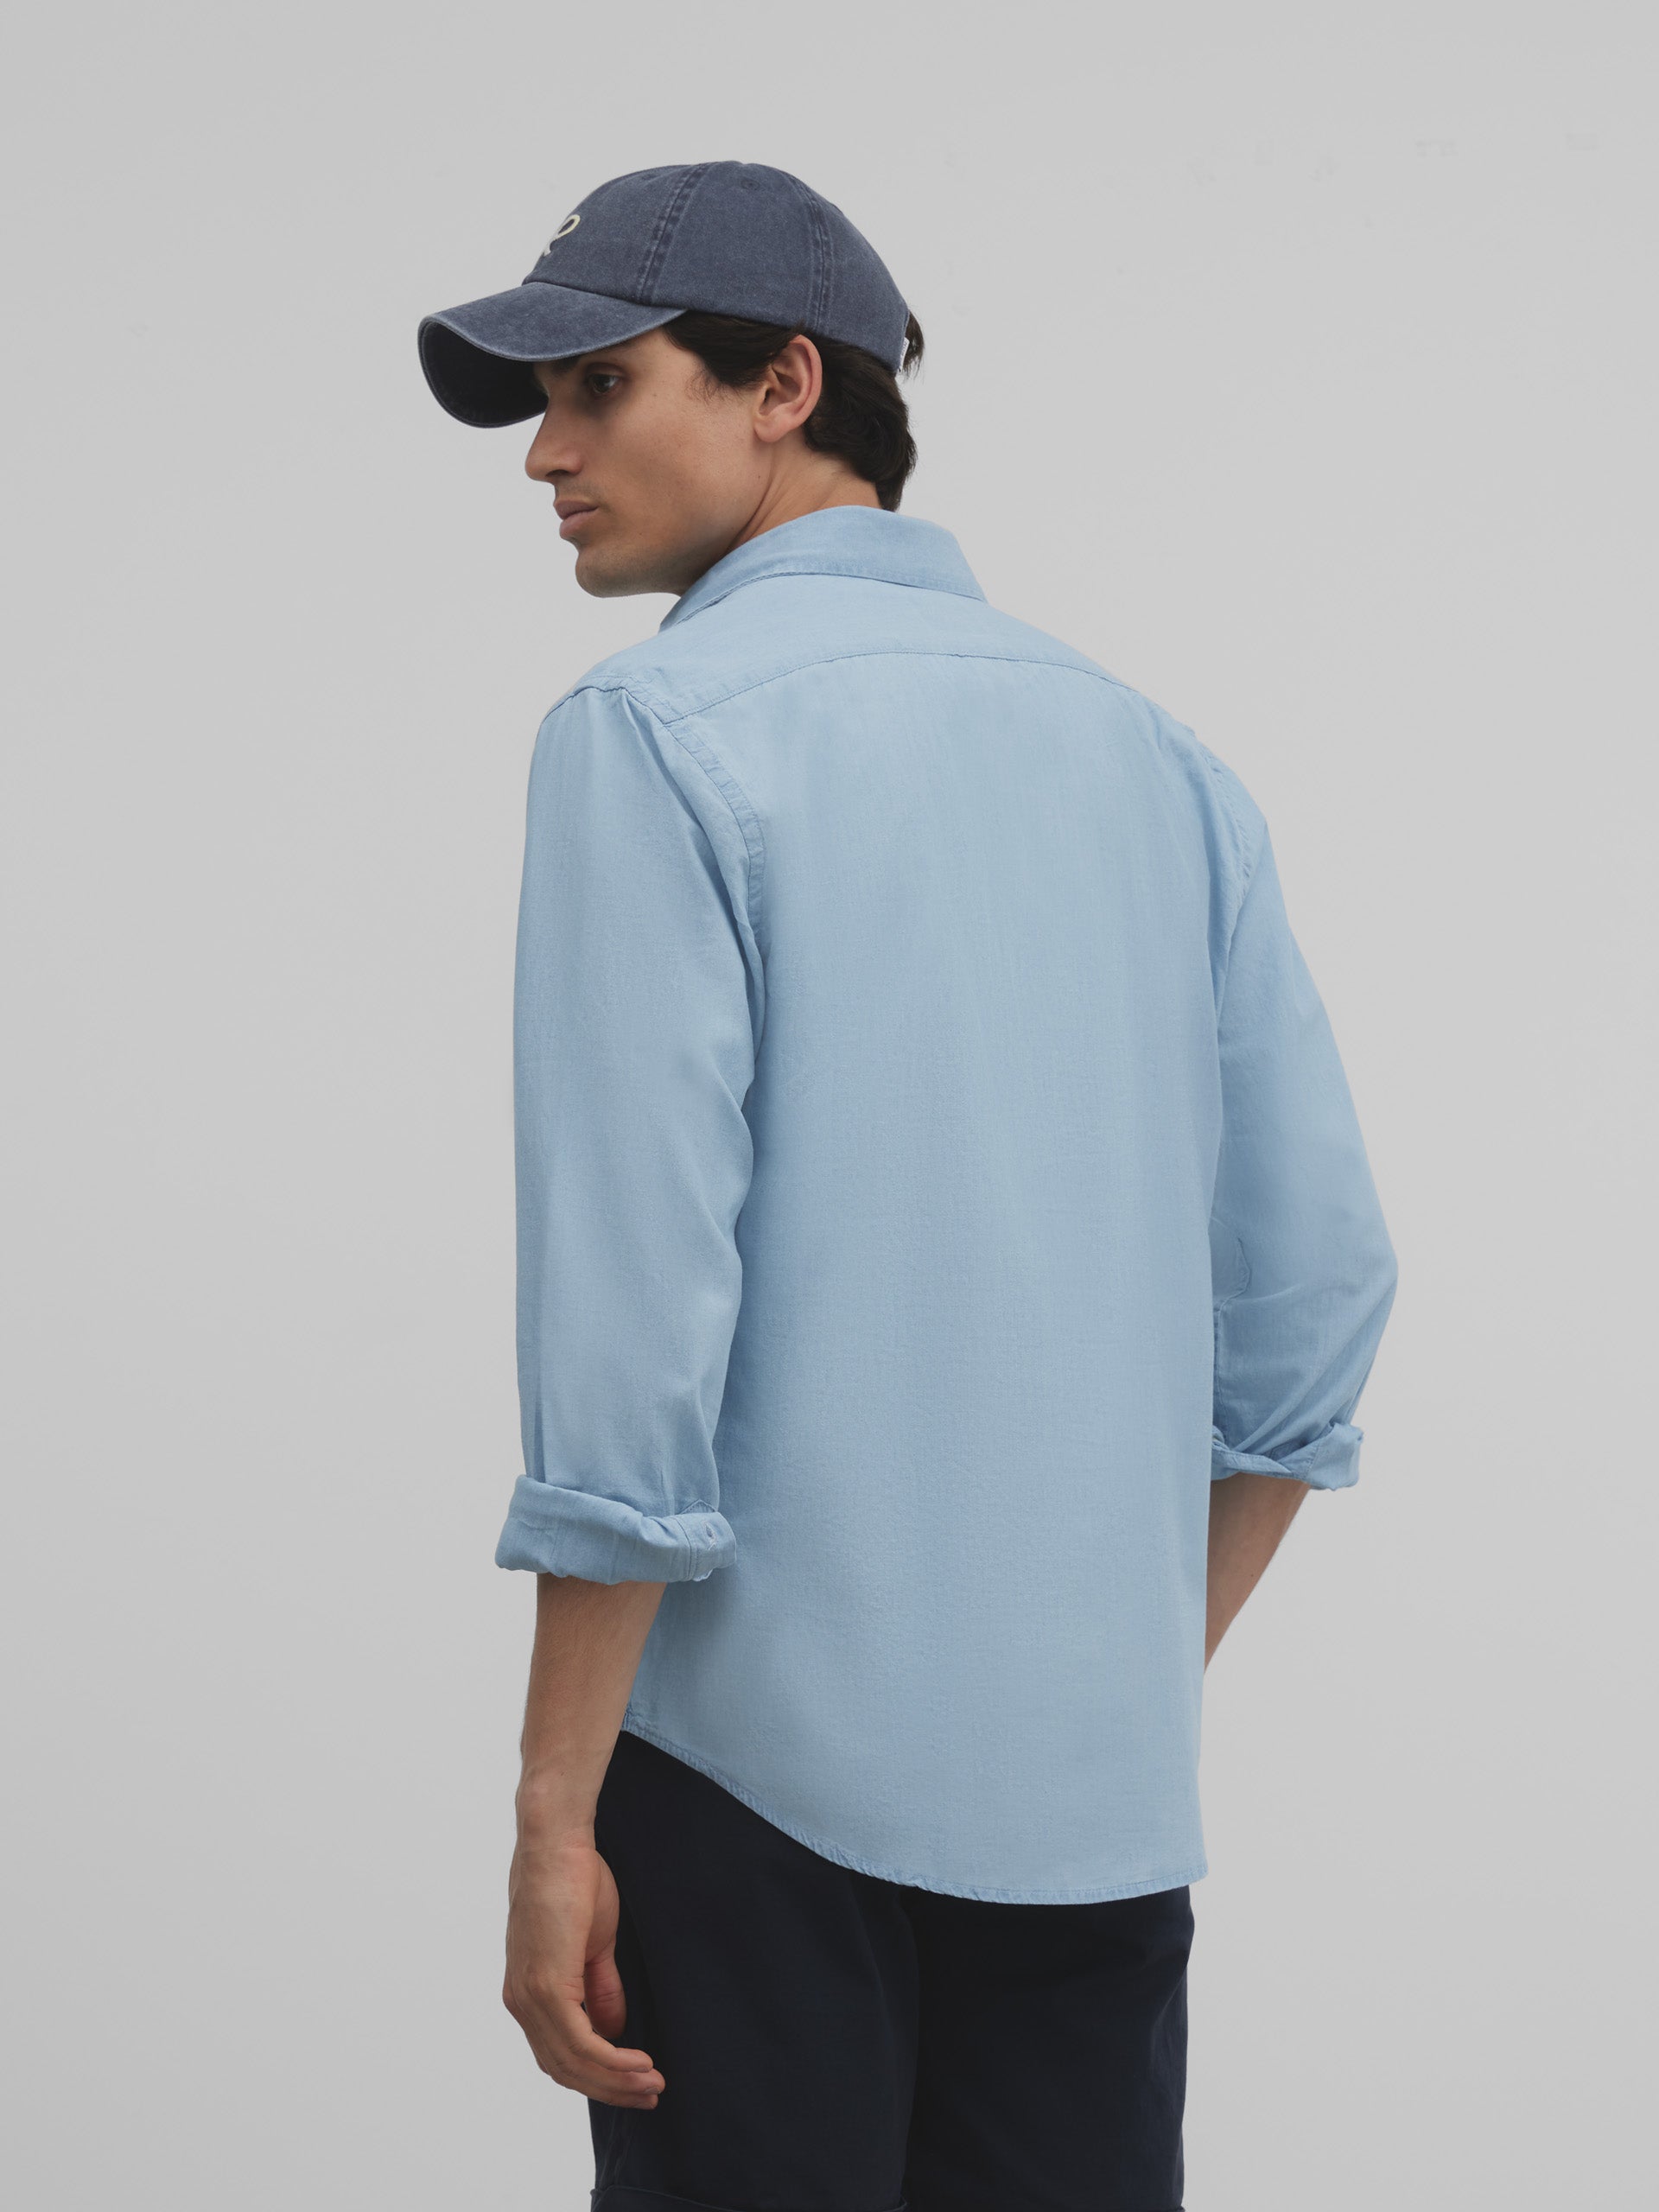 Sport denim shirt with light blue pockets